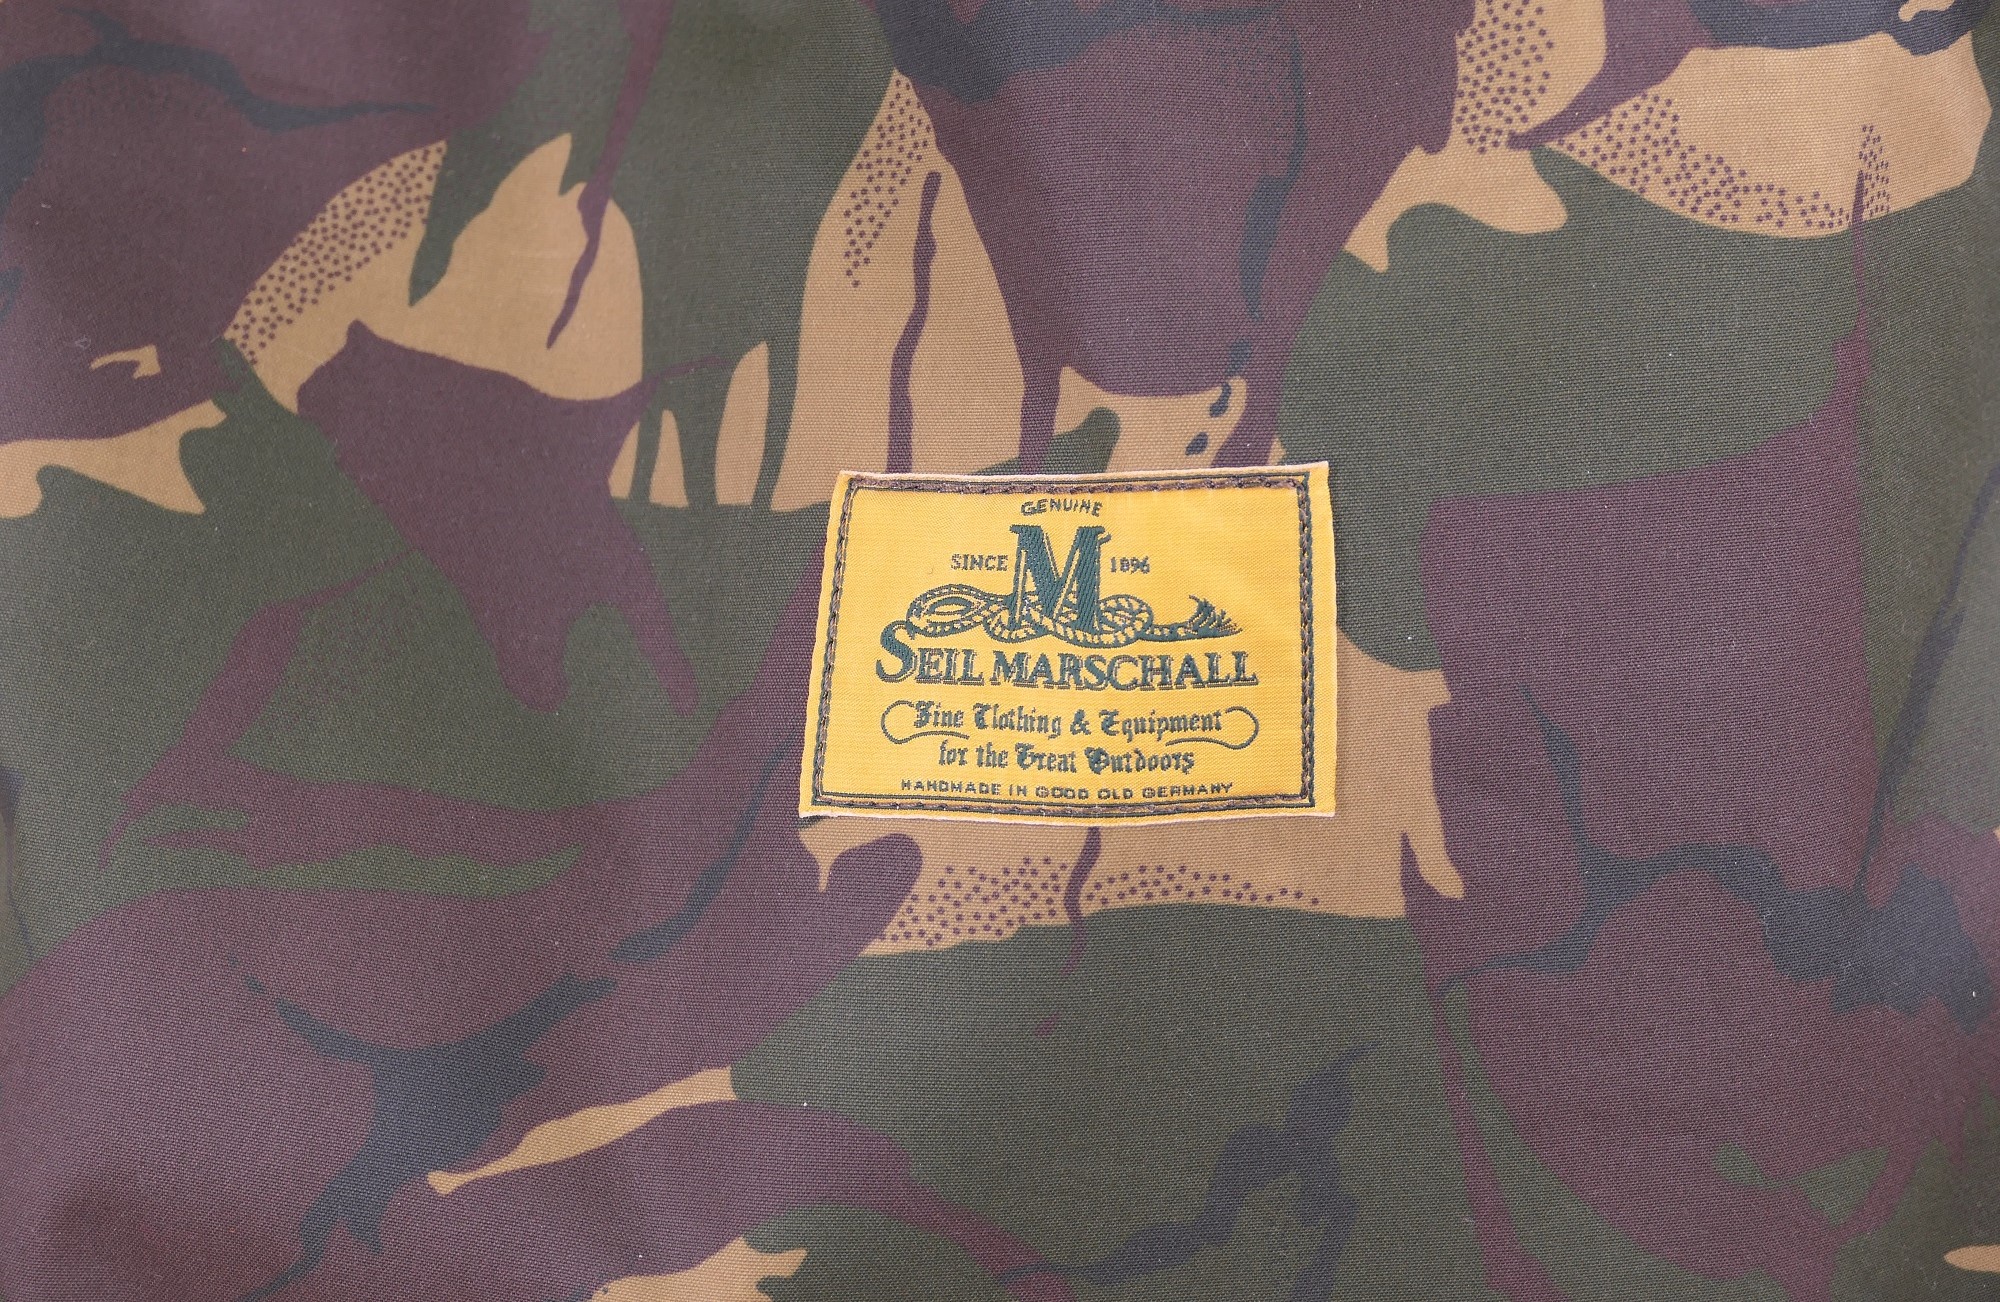  BASIC TOTE BAG " Camouflage"